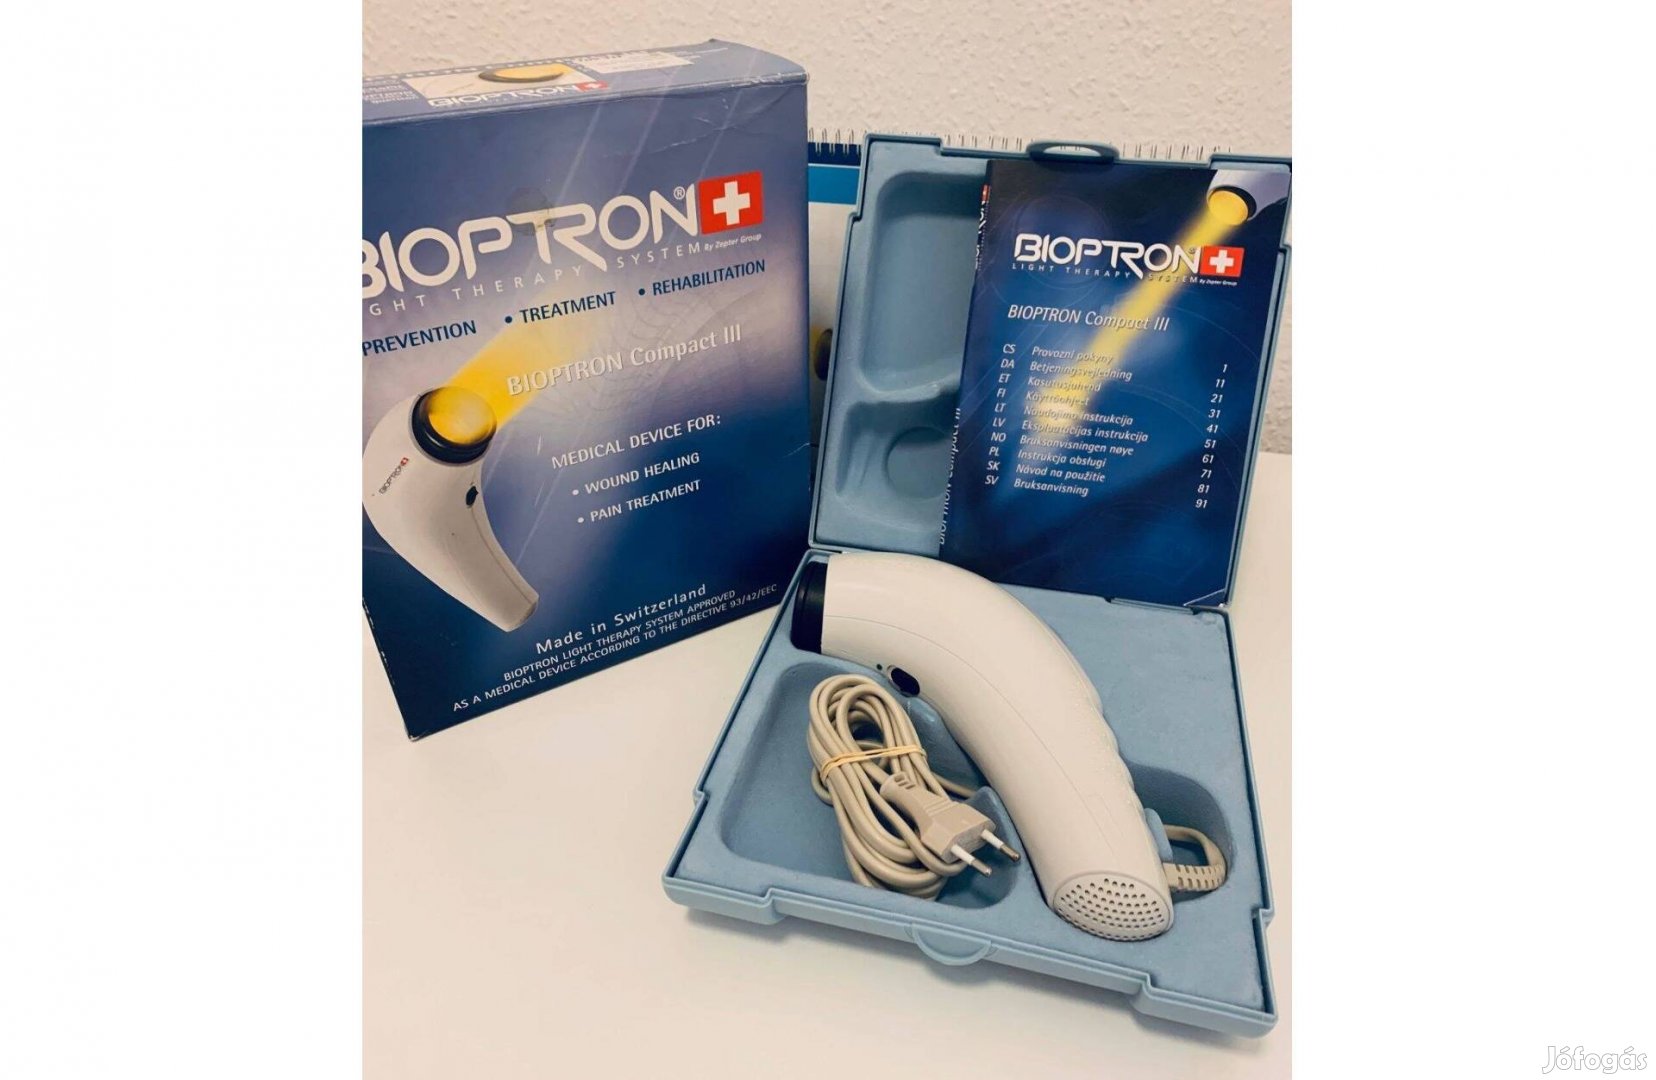 Zepter Bioptron Compact Kézi Lámpa Garancia 4 Év számla